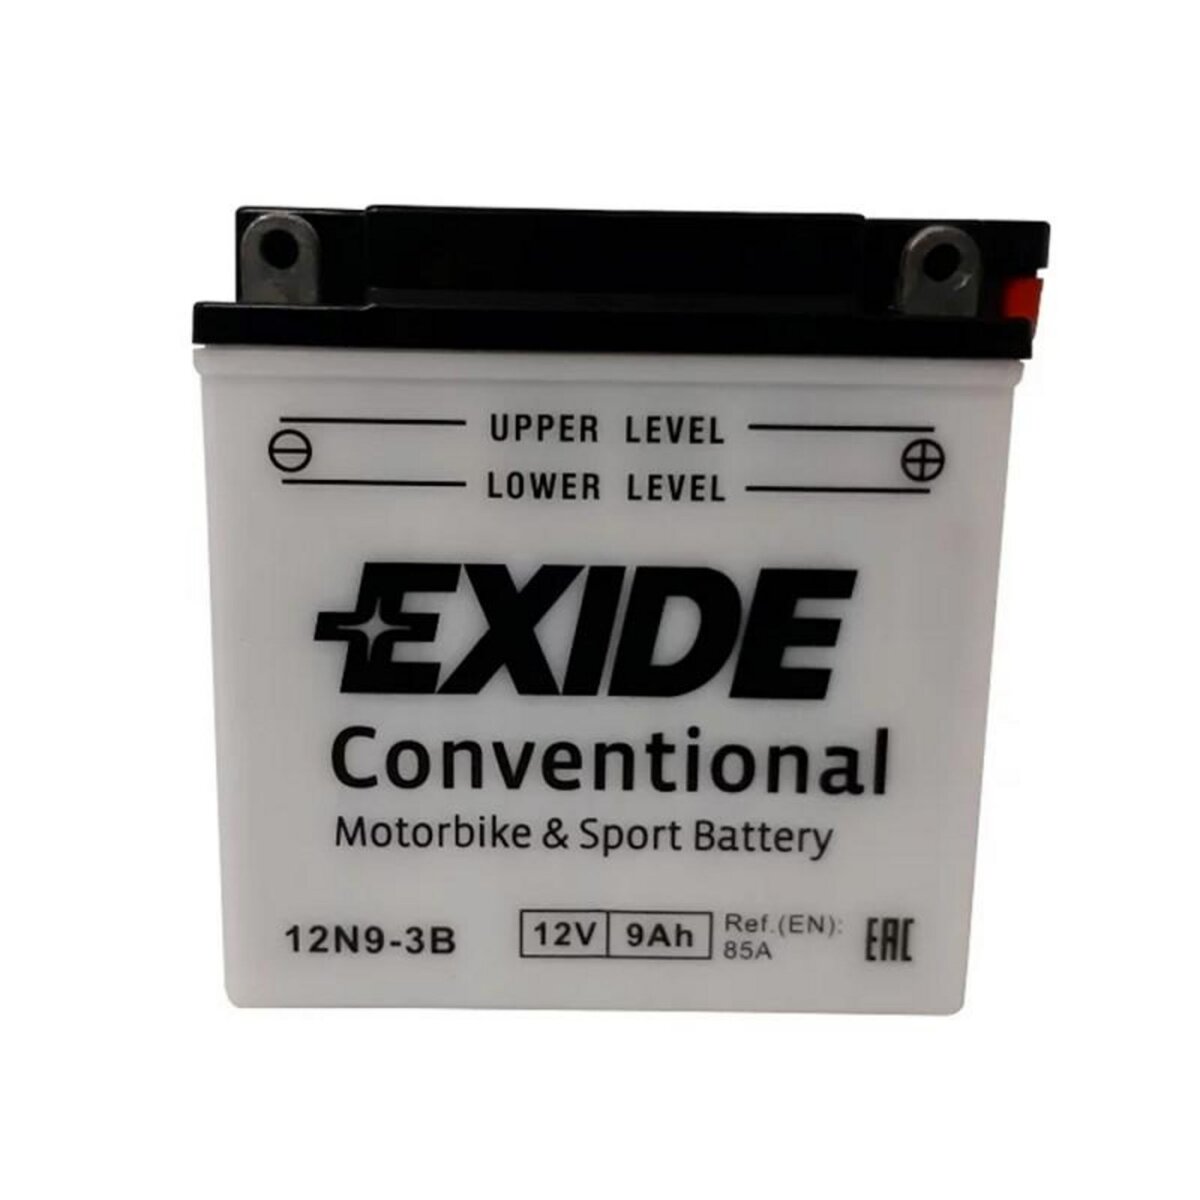 EXIDE Batterie moto Exide 12N9-3B 12v 9ah 85A